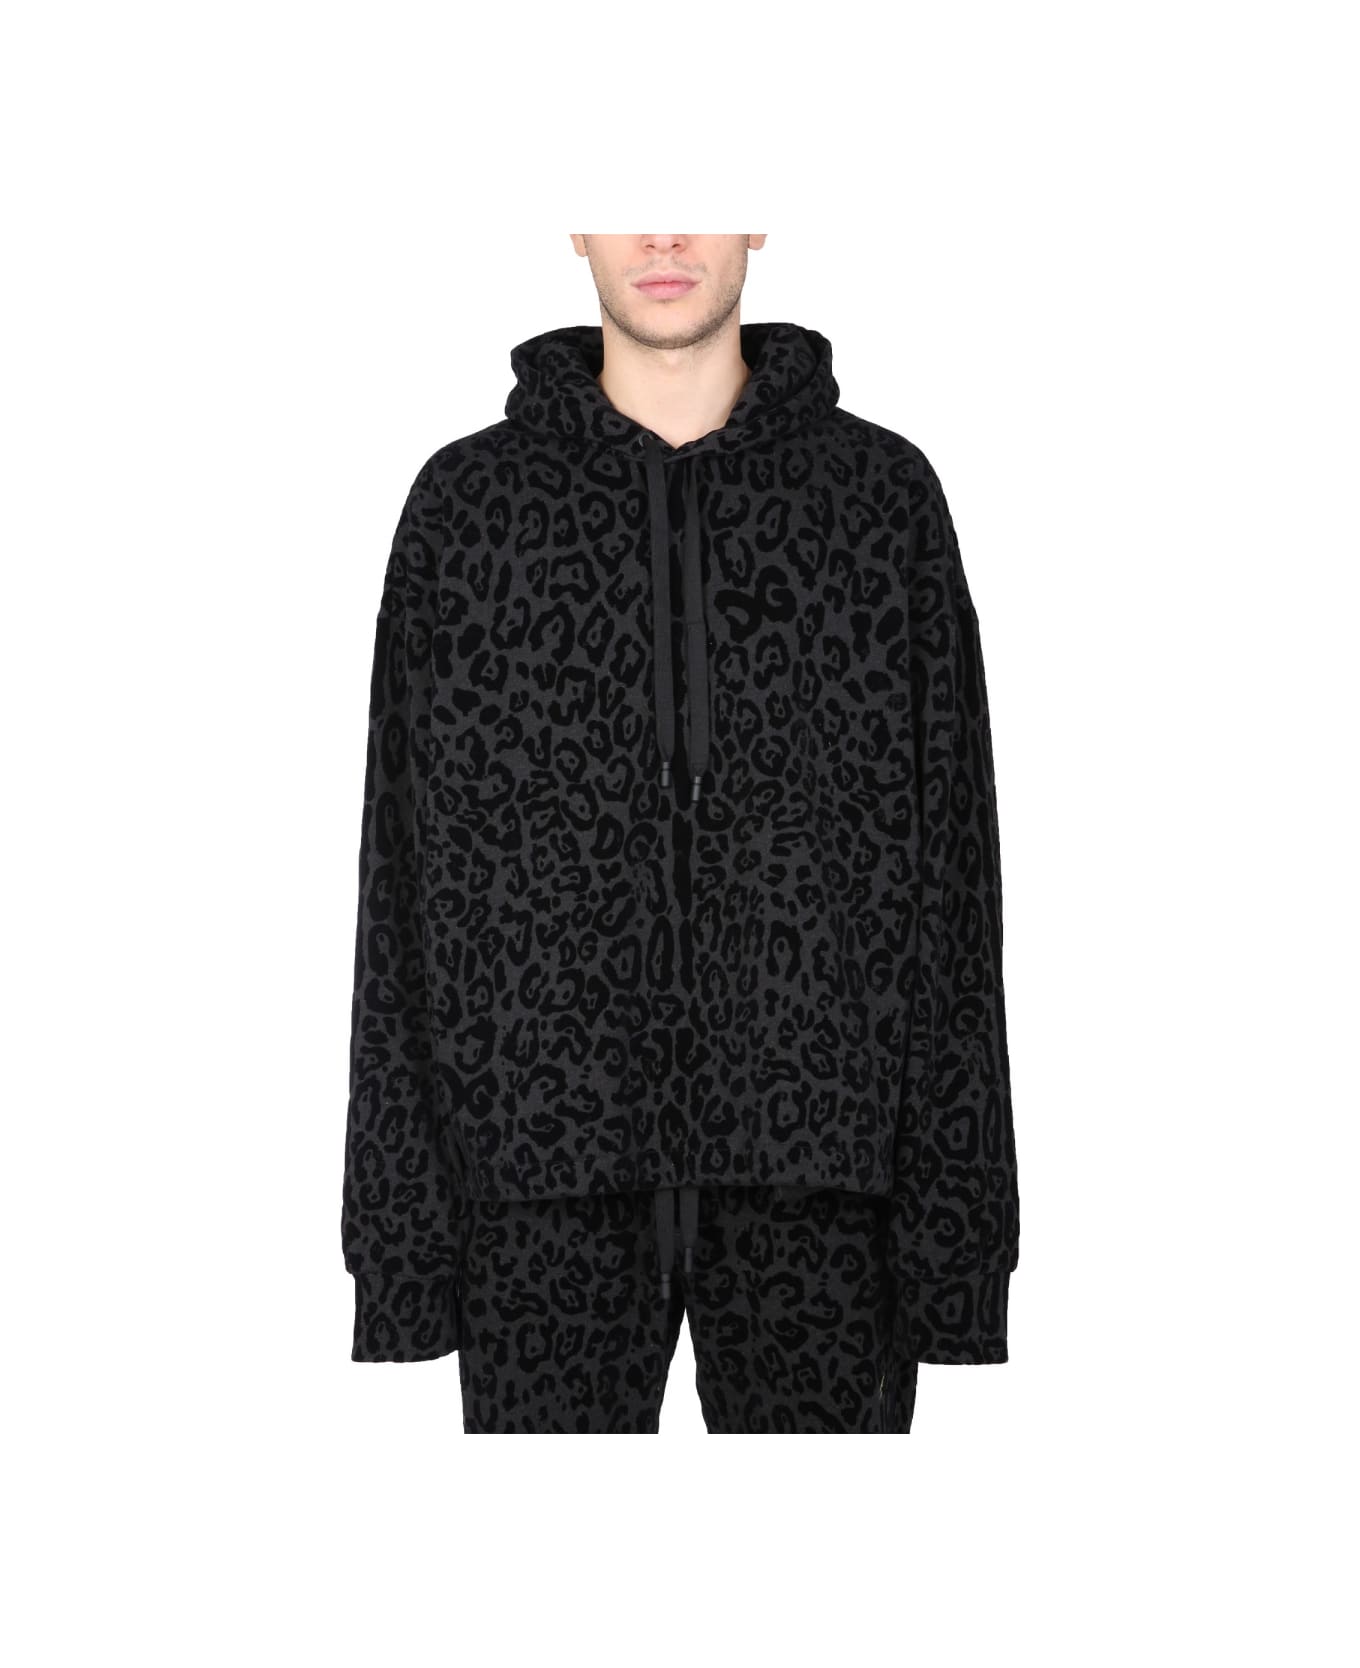 Dolce & Gabbana Sweatshirt With Leopard Print - ANIMALIER